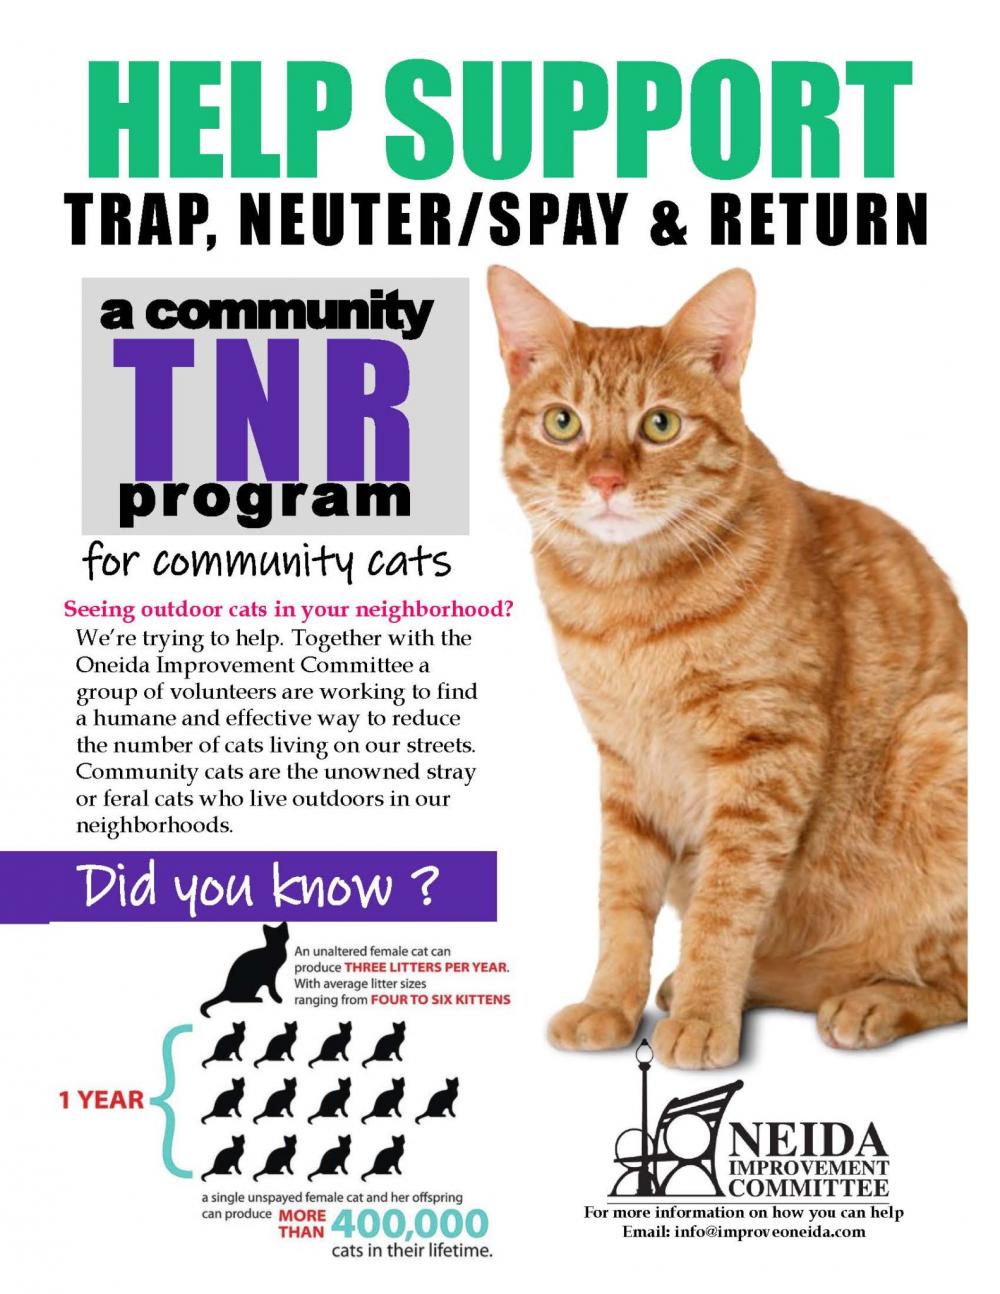 Drop Trap for Community Cat TNR